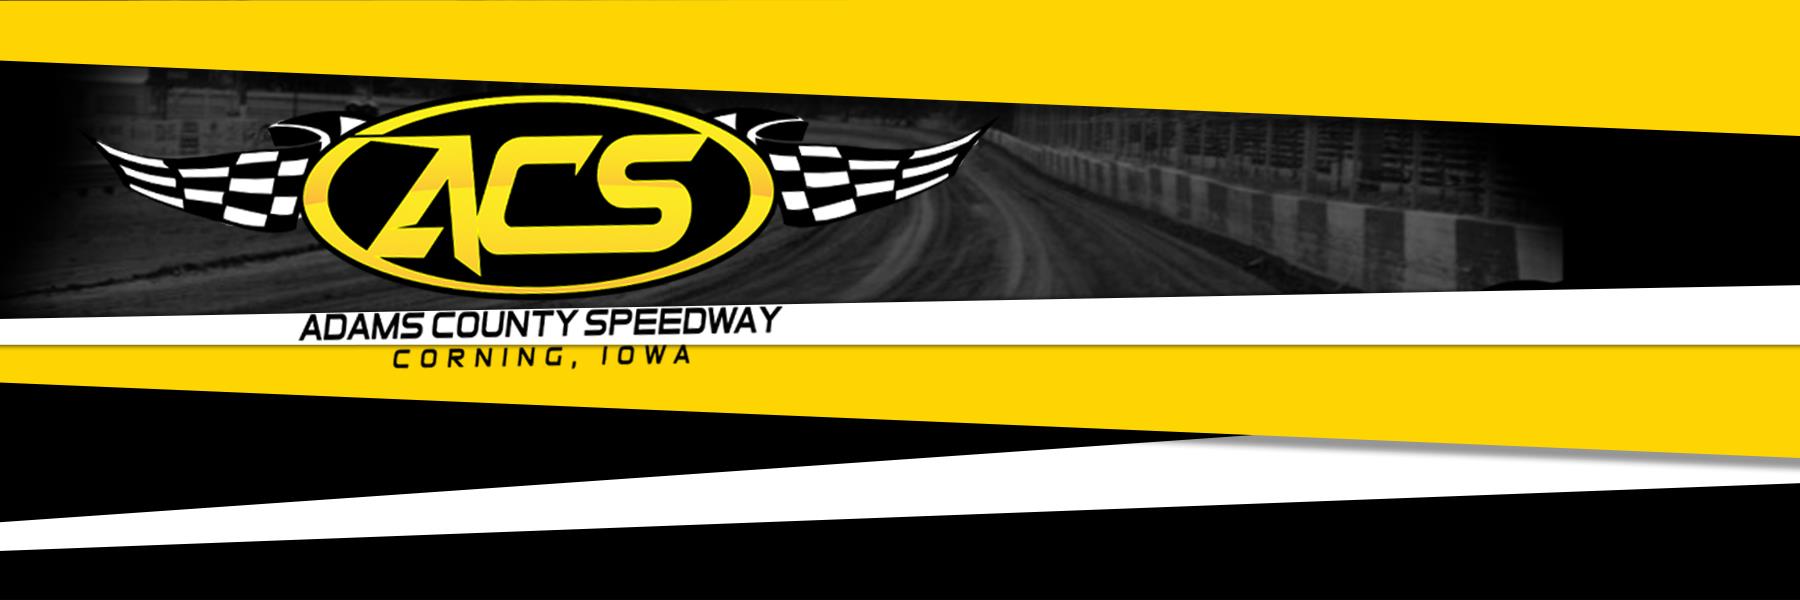 5/29/2021 - Adams County Speedway